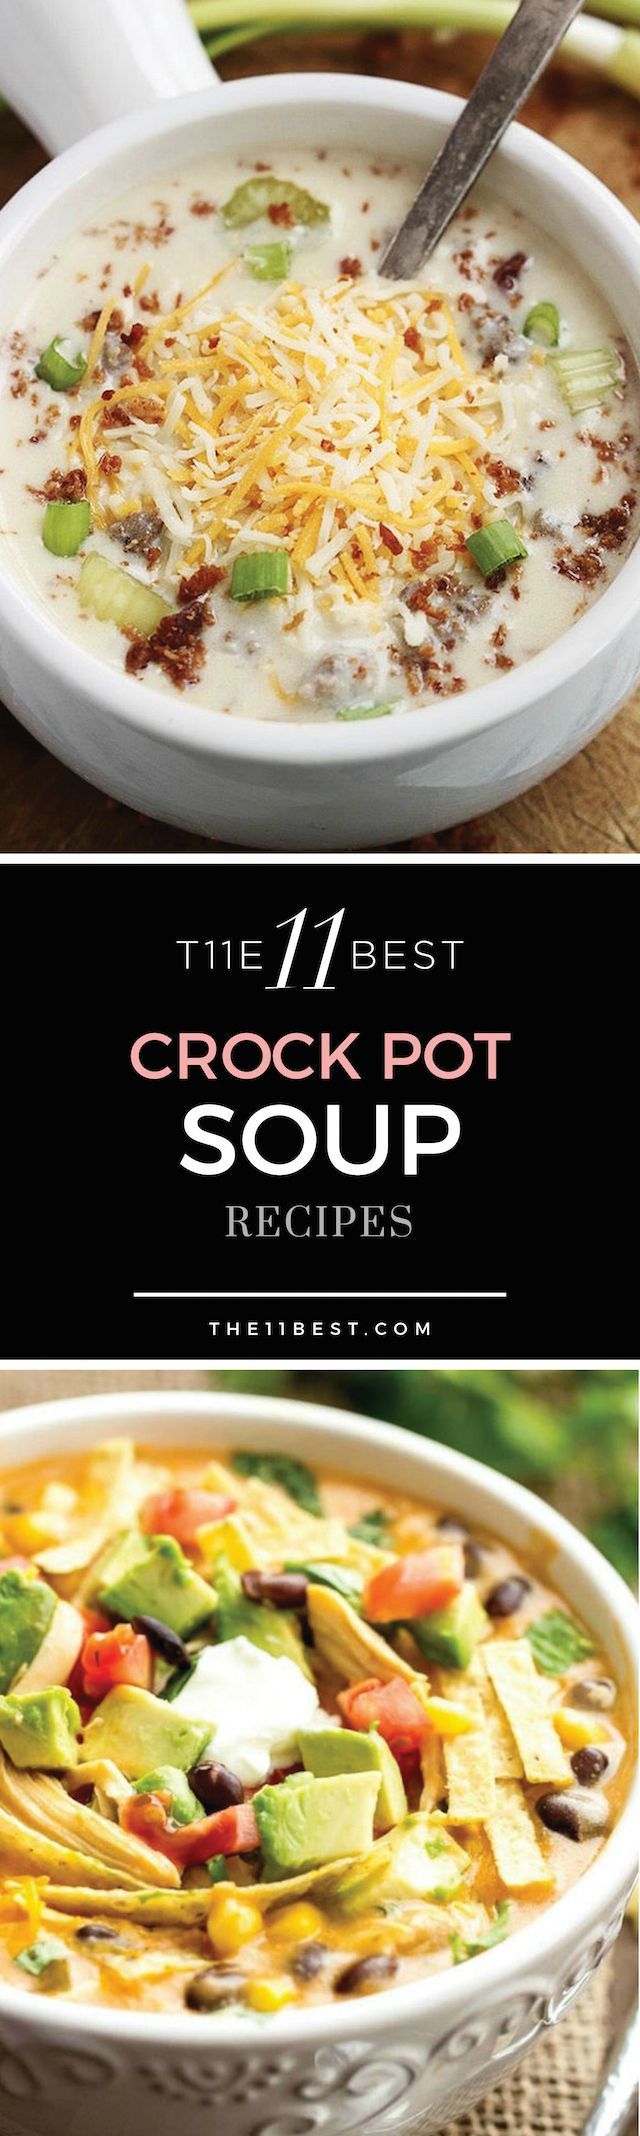 The 11 Best Crock Pot Soup Recipes